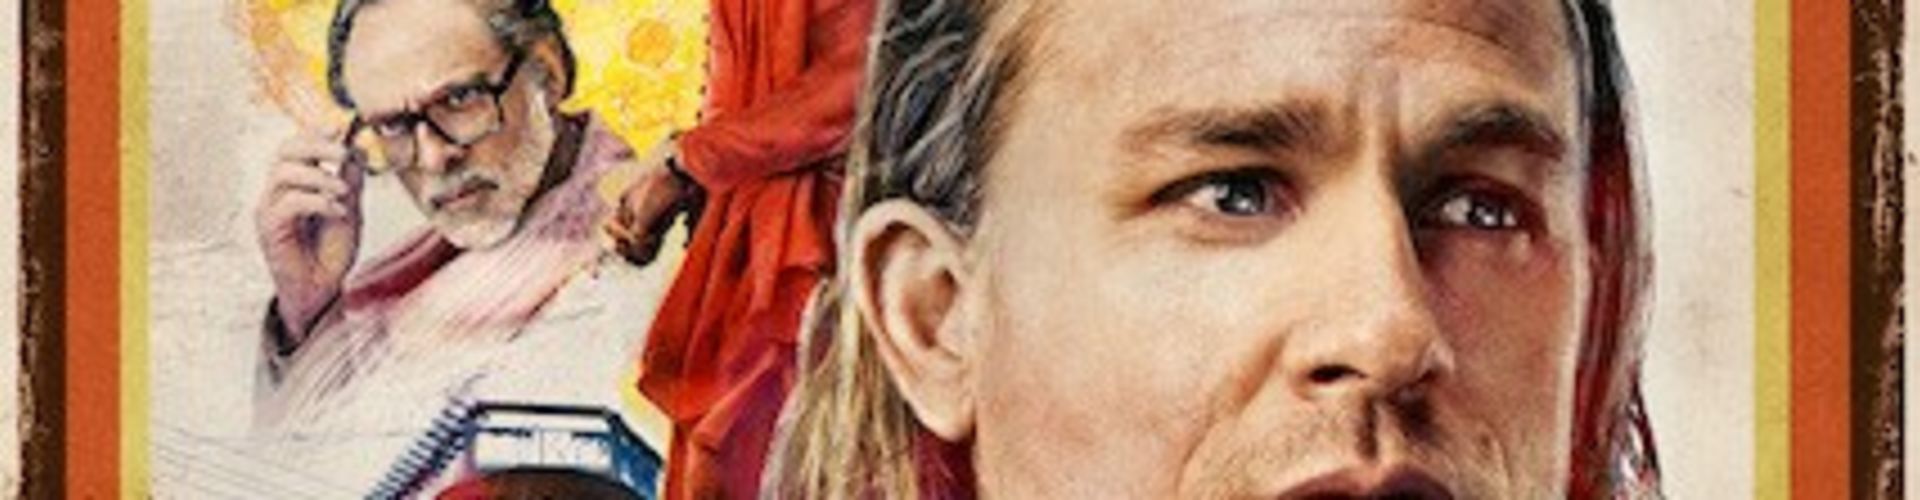 Shantaram Trailer Is Out, Starring Charlie Hunnam